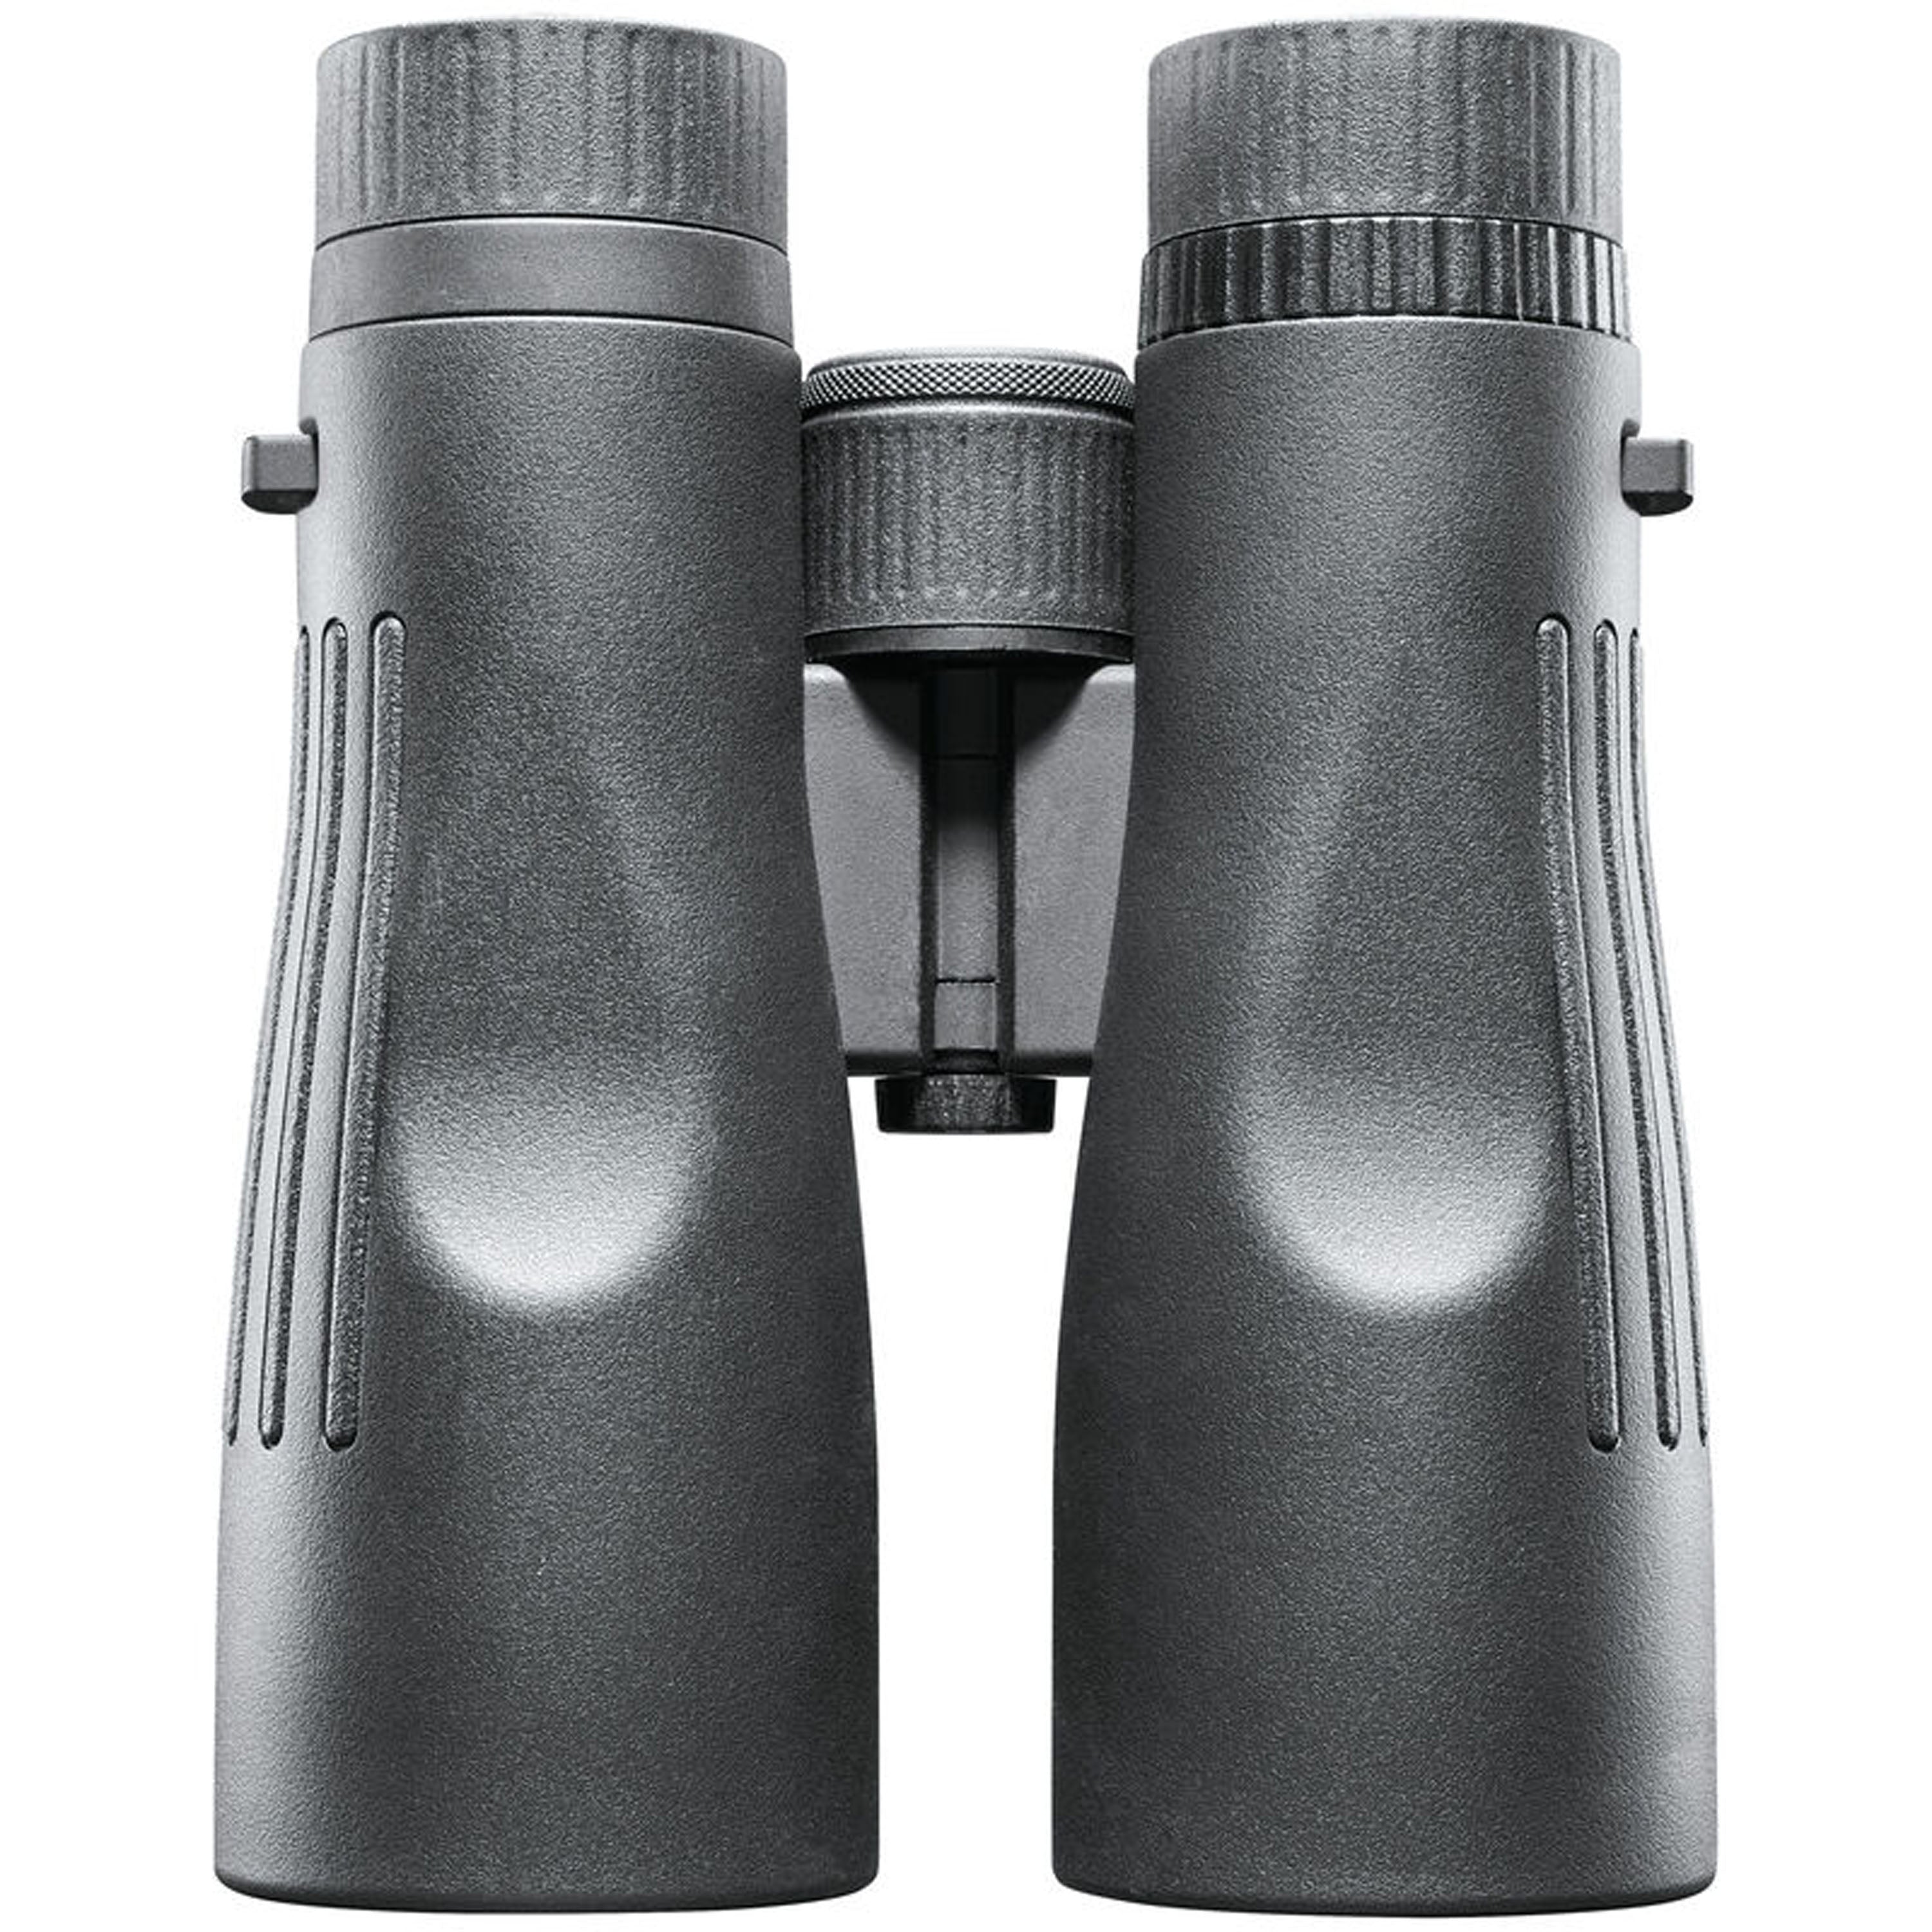 Bushnell Legend 12X50 Roof Prism Binoculars